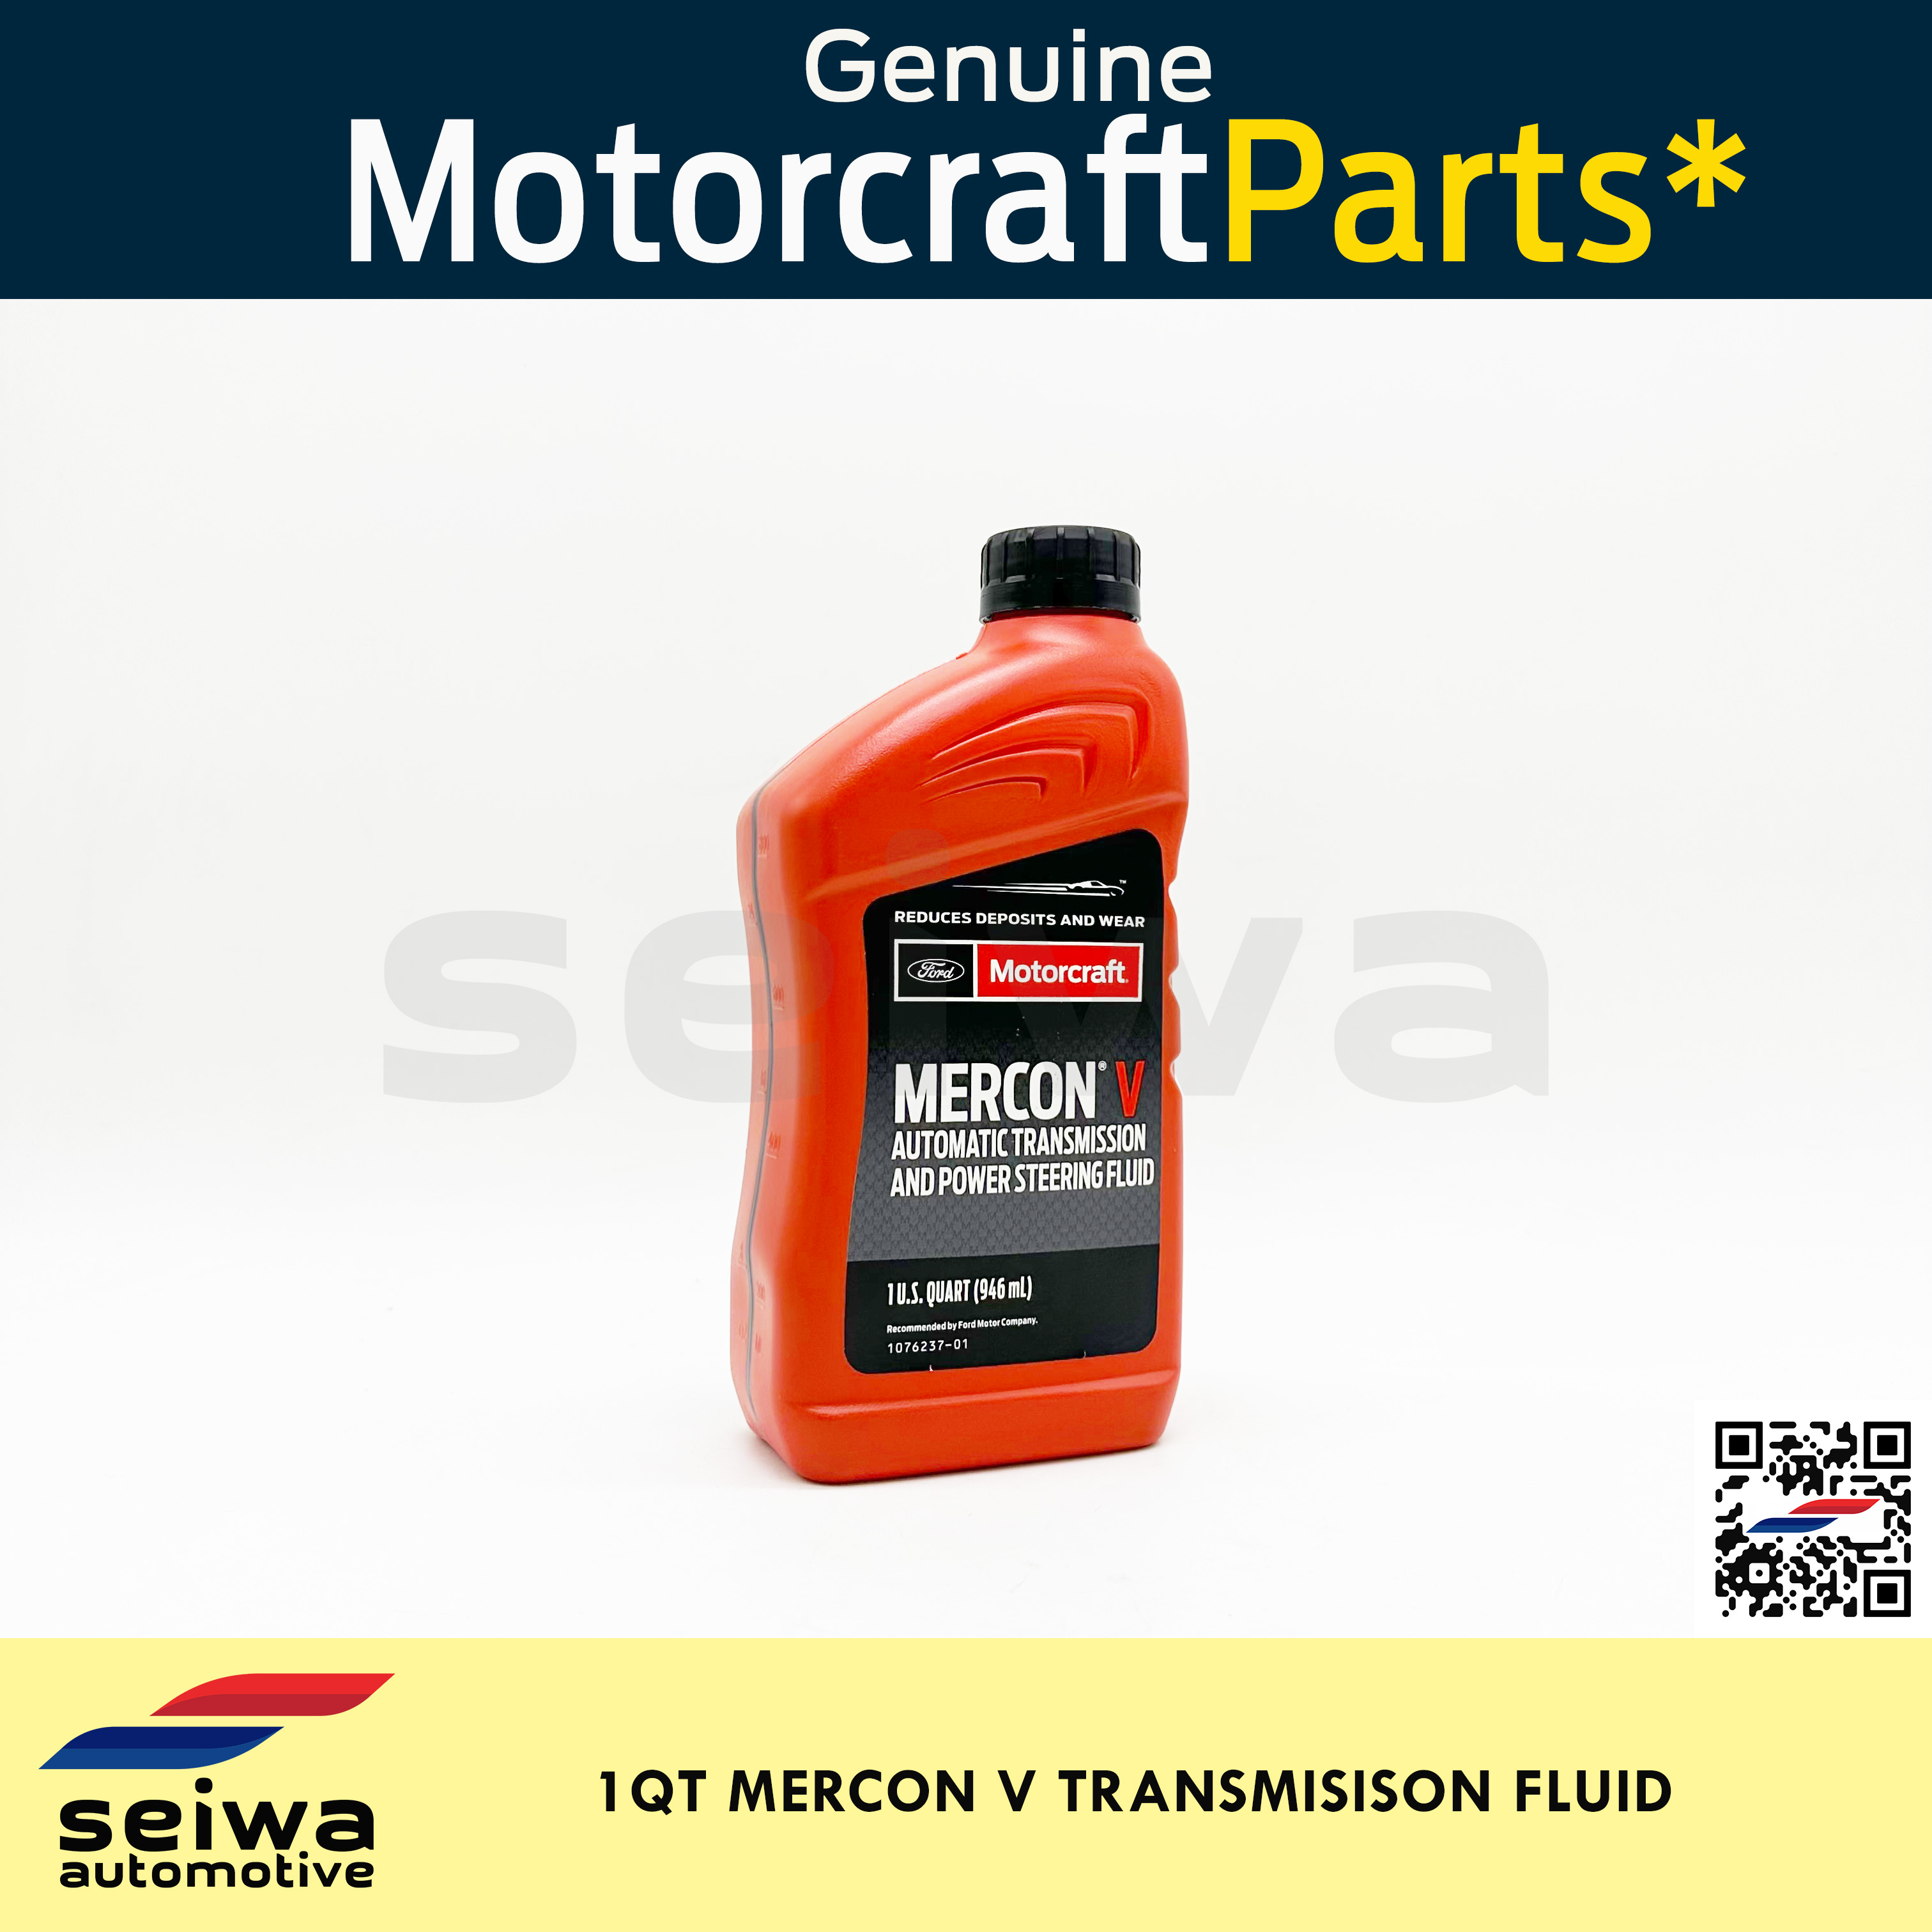 motorcraft micron lv transmission fluid